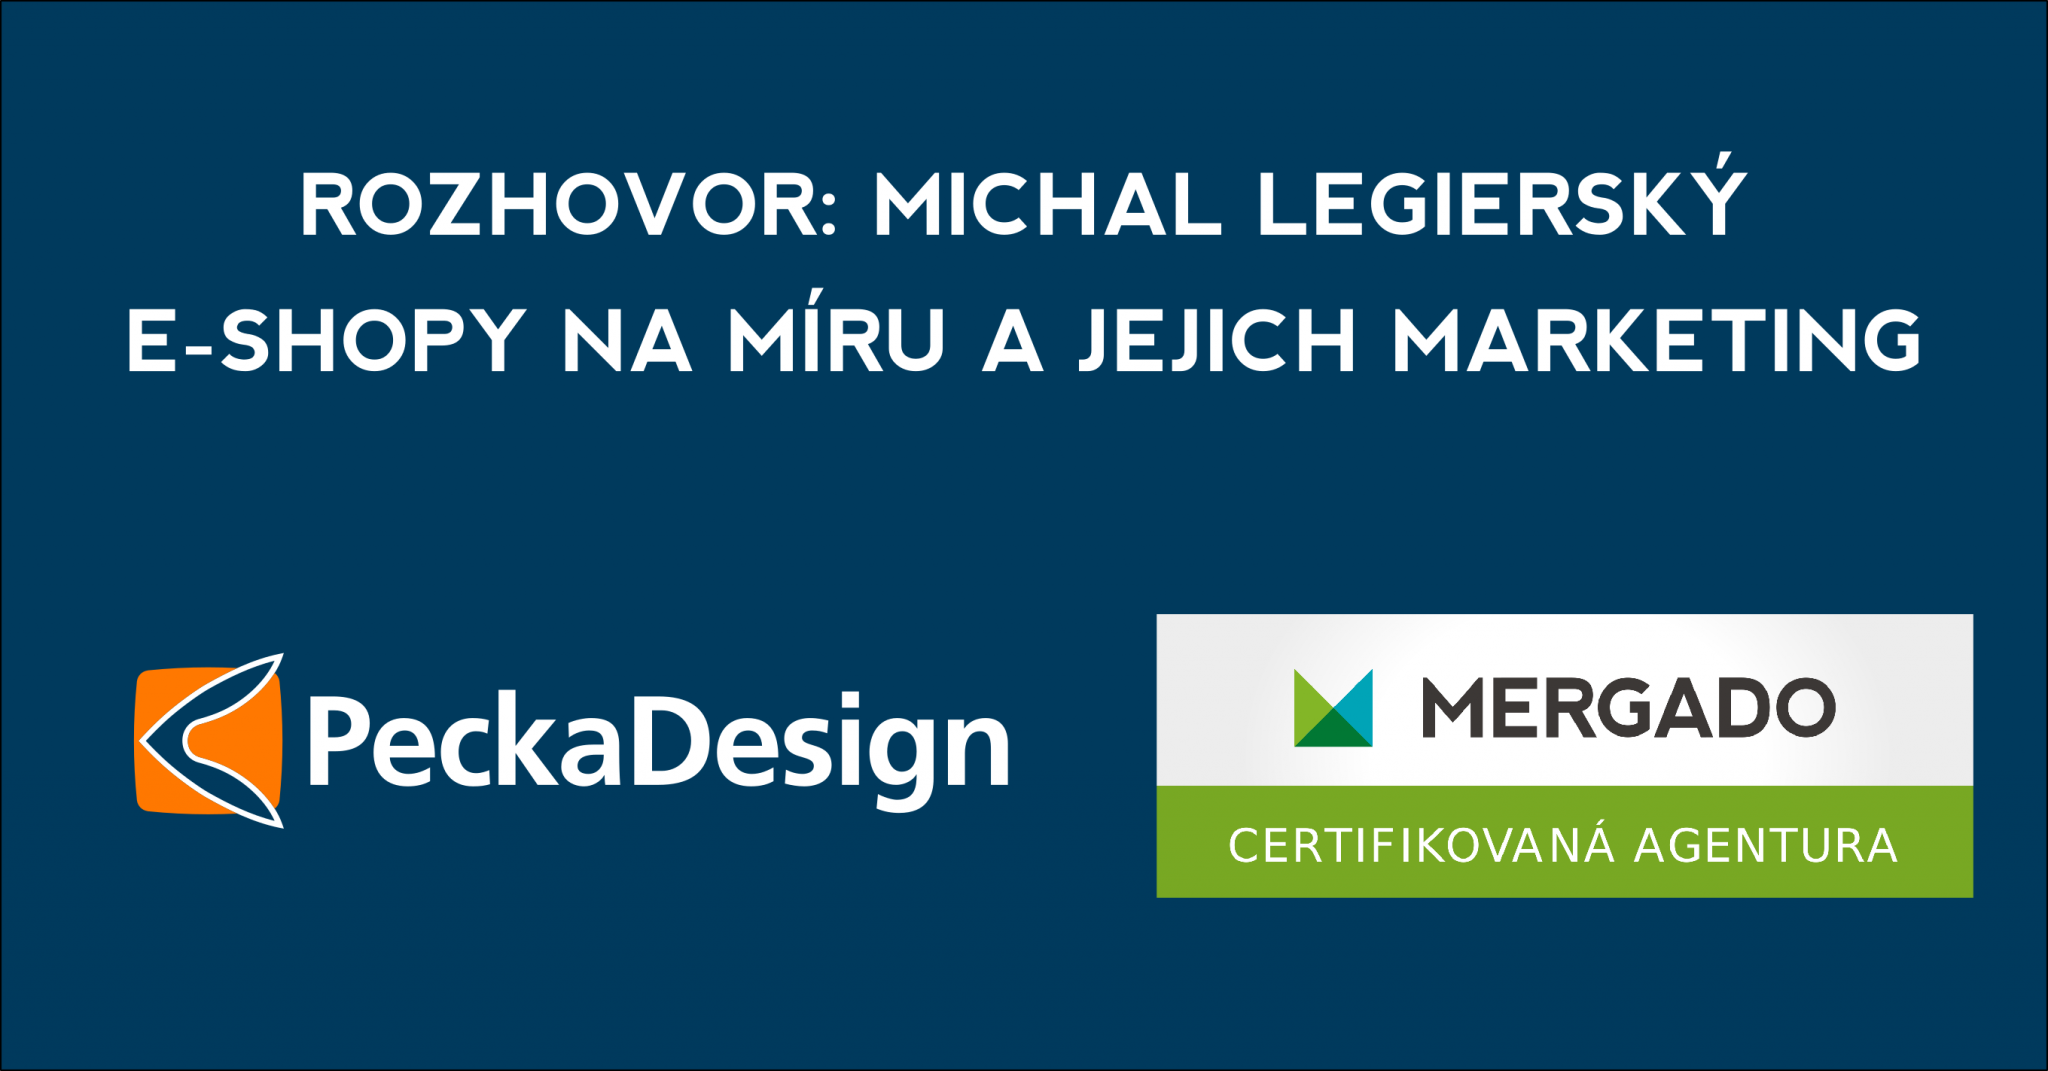 Rozhovor o marketingu s Michalem Legierským	